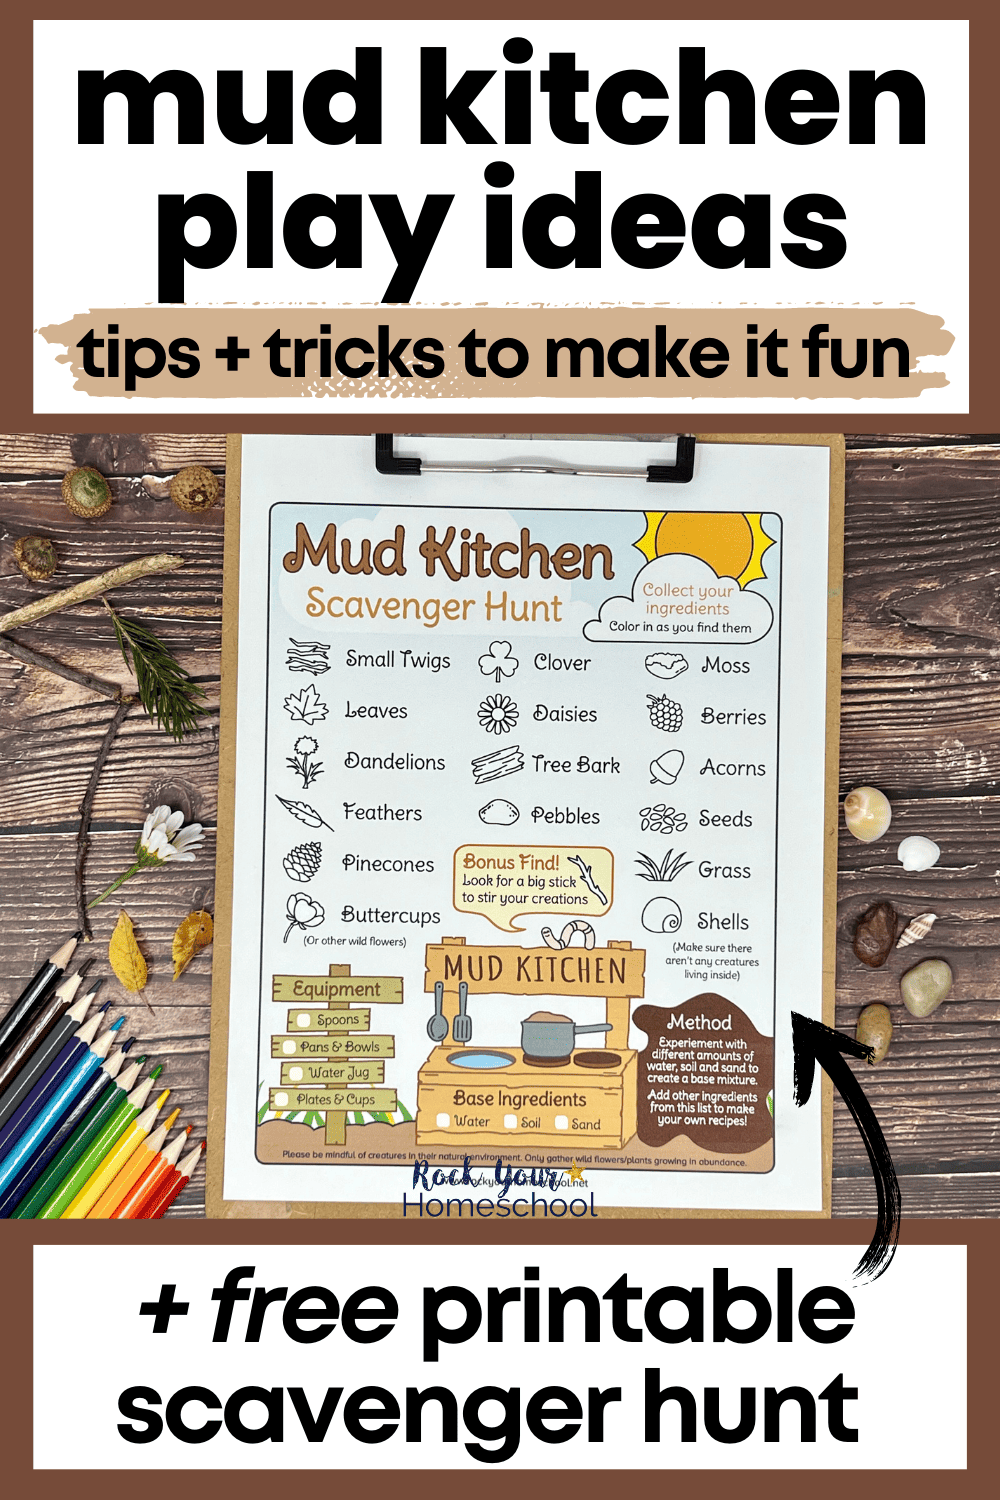 Mud Kitchen Play Ideas: Fun Ways to Enjoy Plus Free Printable Scavenger Hunt